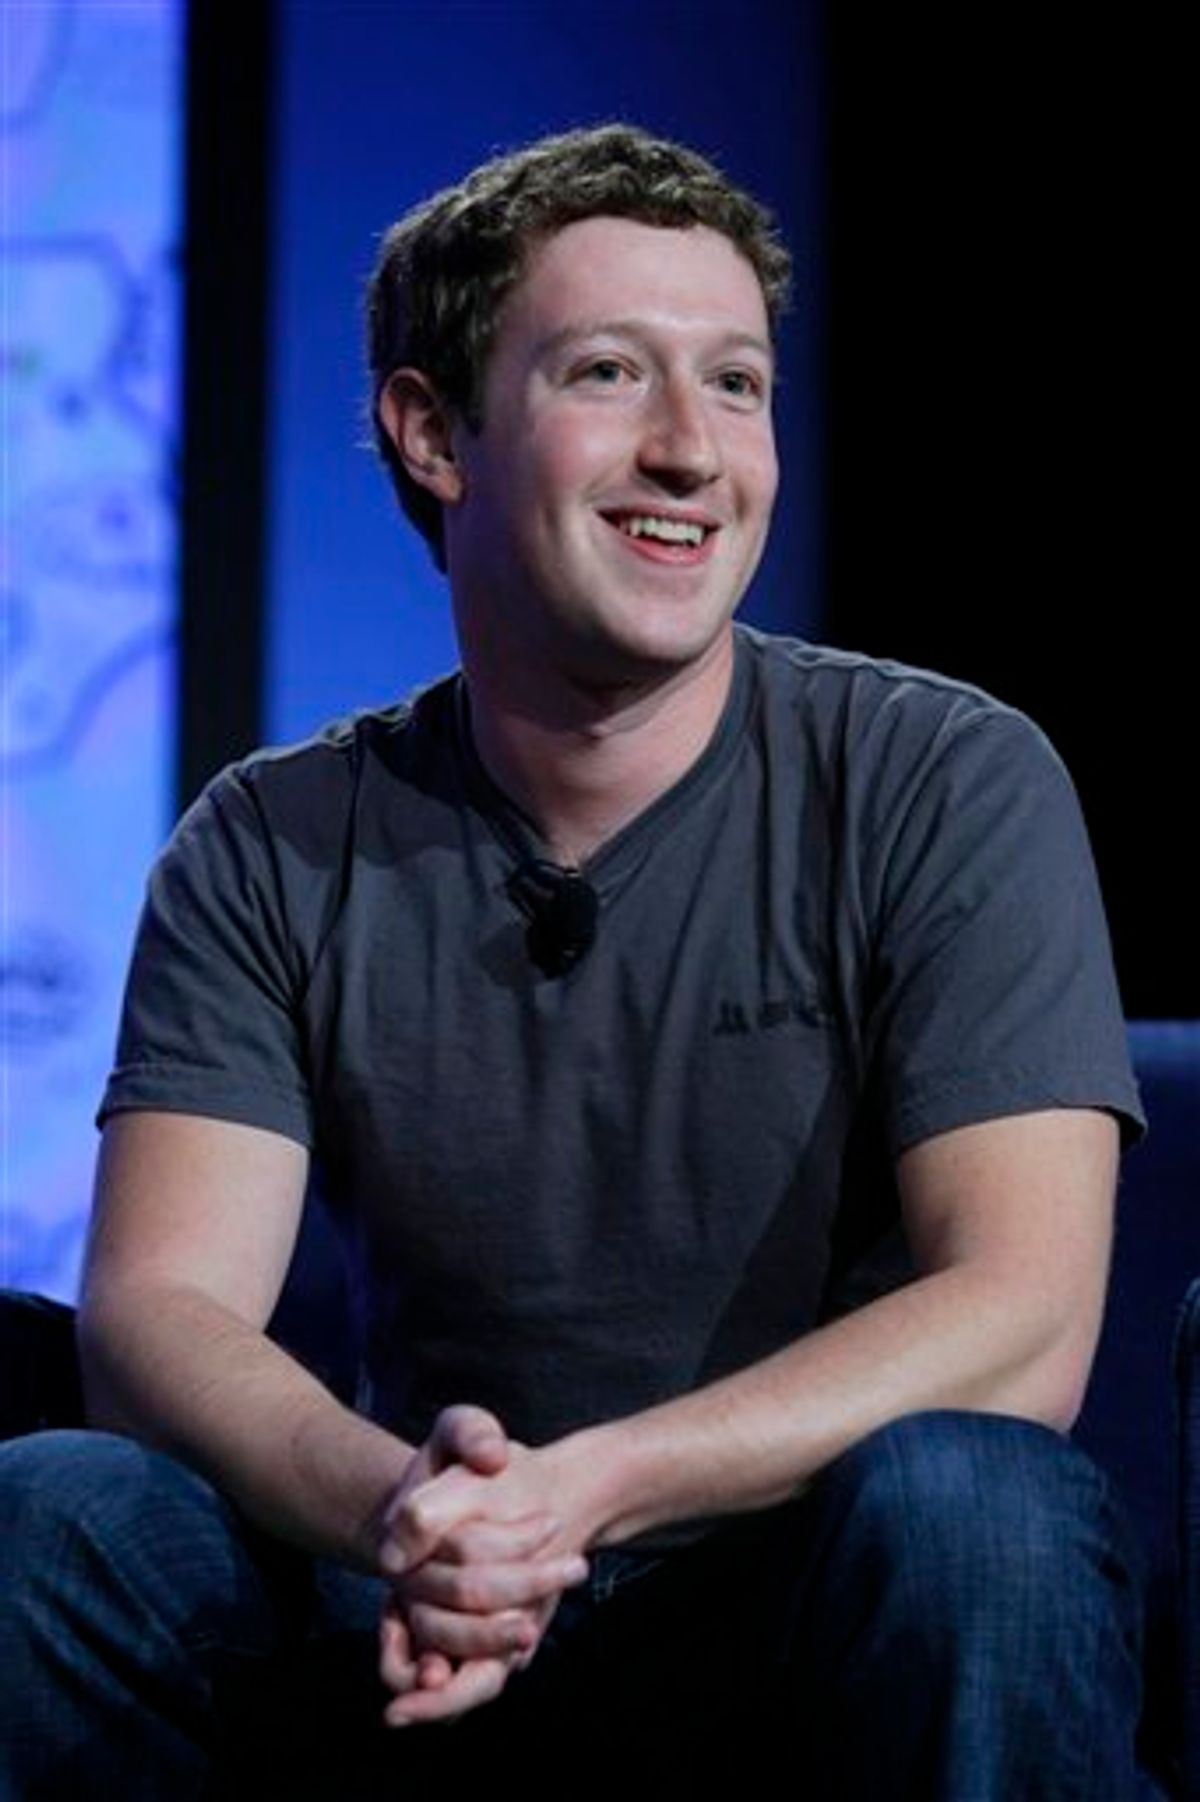 FILE - In this Nov. 16, 2010 file photo, Facebook CEO Mark Zuckerberg smiles as he speaks at the Web 2.0 Summit in San Francisco. (AP Photo/Paul Sakuma, file)          (AP)